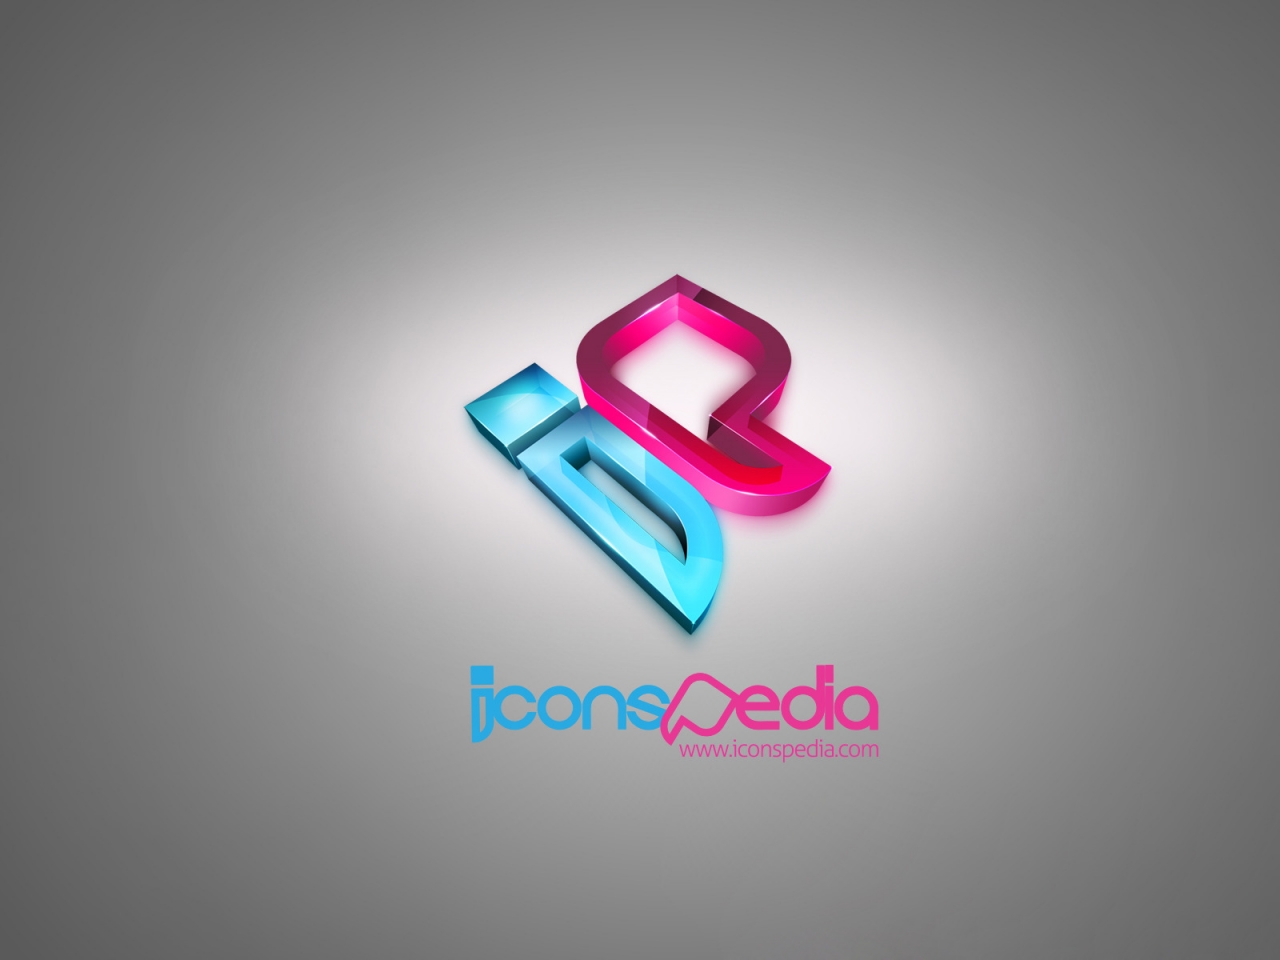 Iconspedia Logo for 1280 x 960 resolution